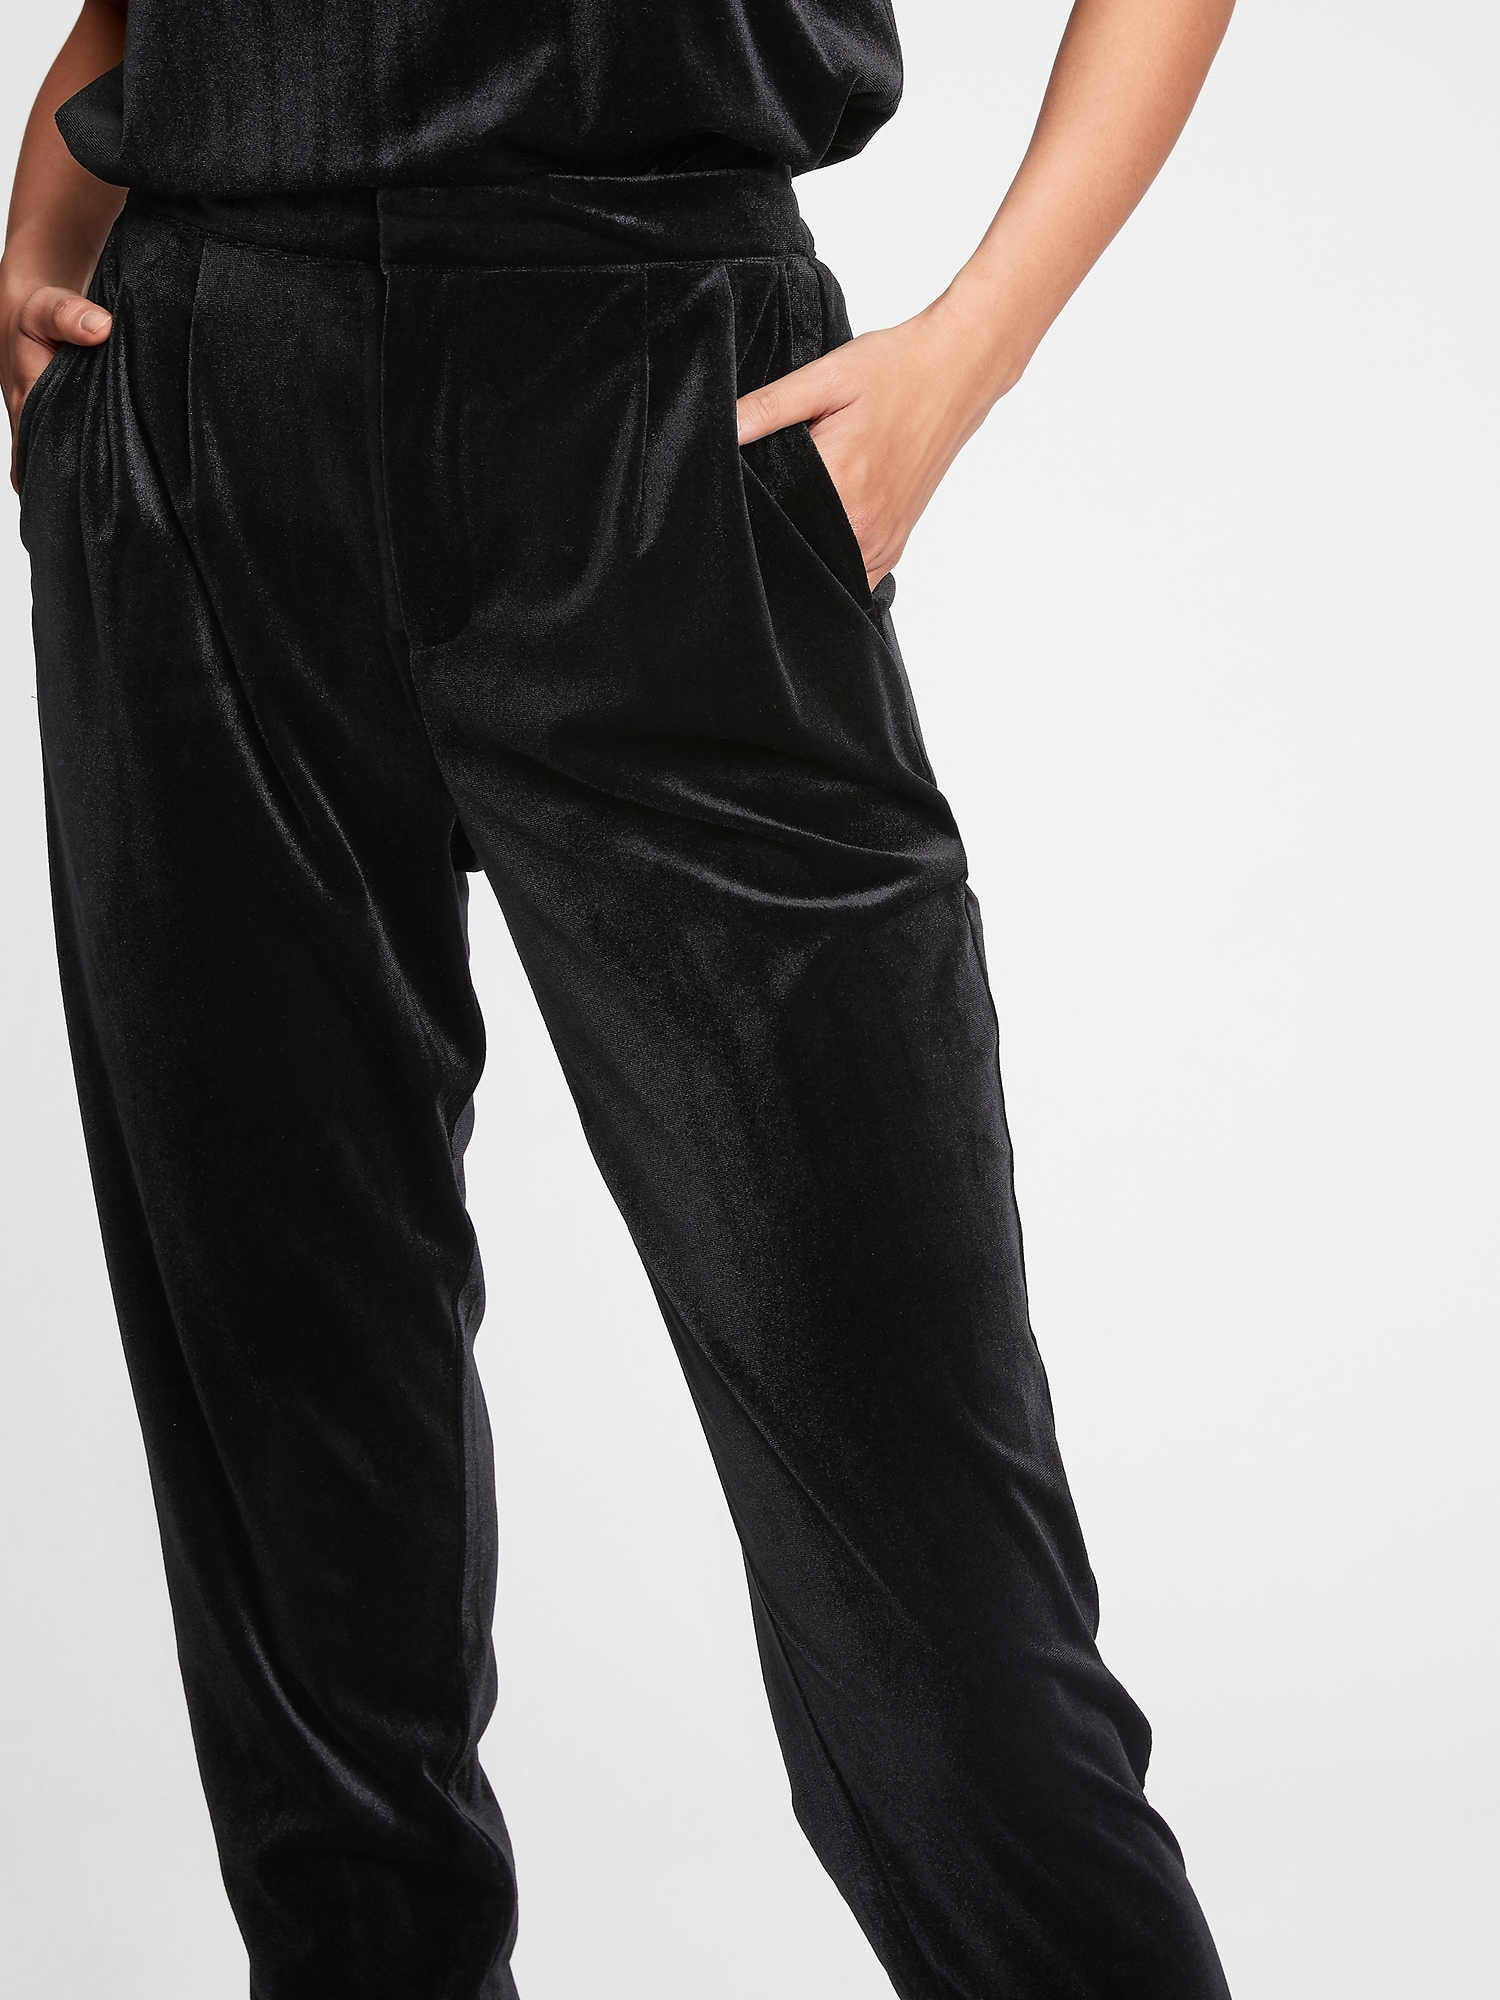 Premium Velvet Joggers for Women - Ultra-Soft Warm Velour Pants - Black -  1X-2X at  Women's Clothing store